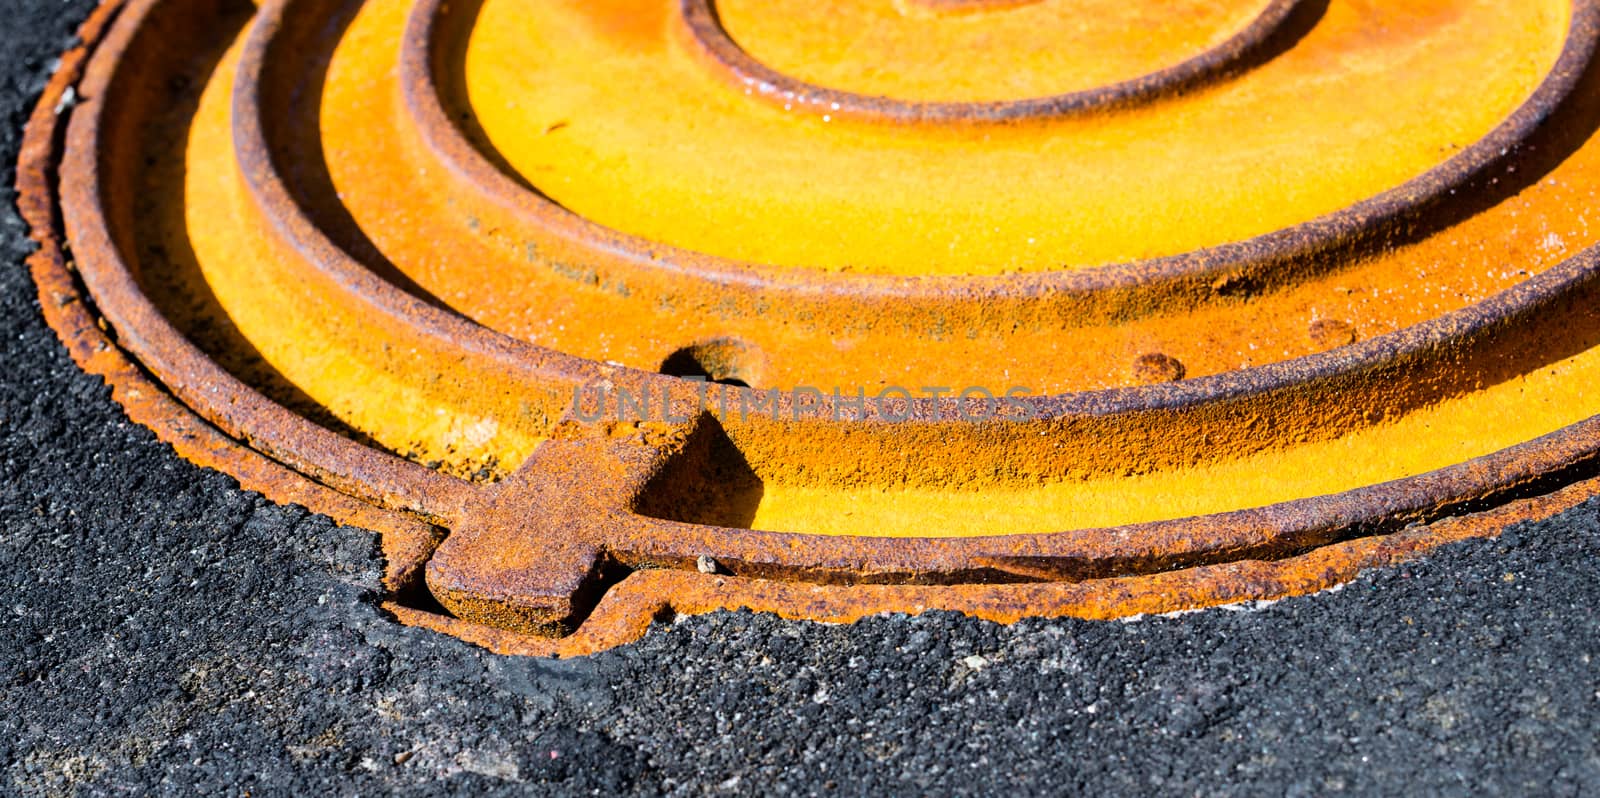 Rusty metal manhole cover in black asphalt surface